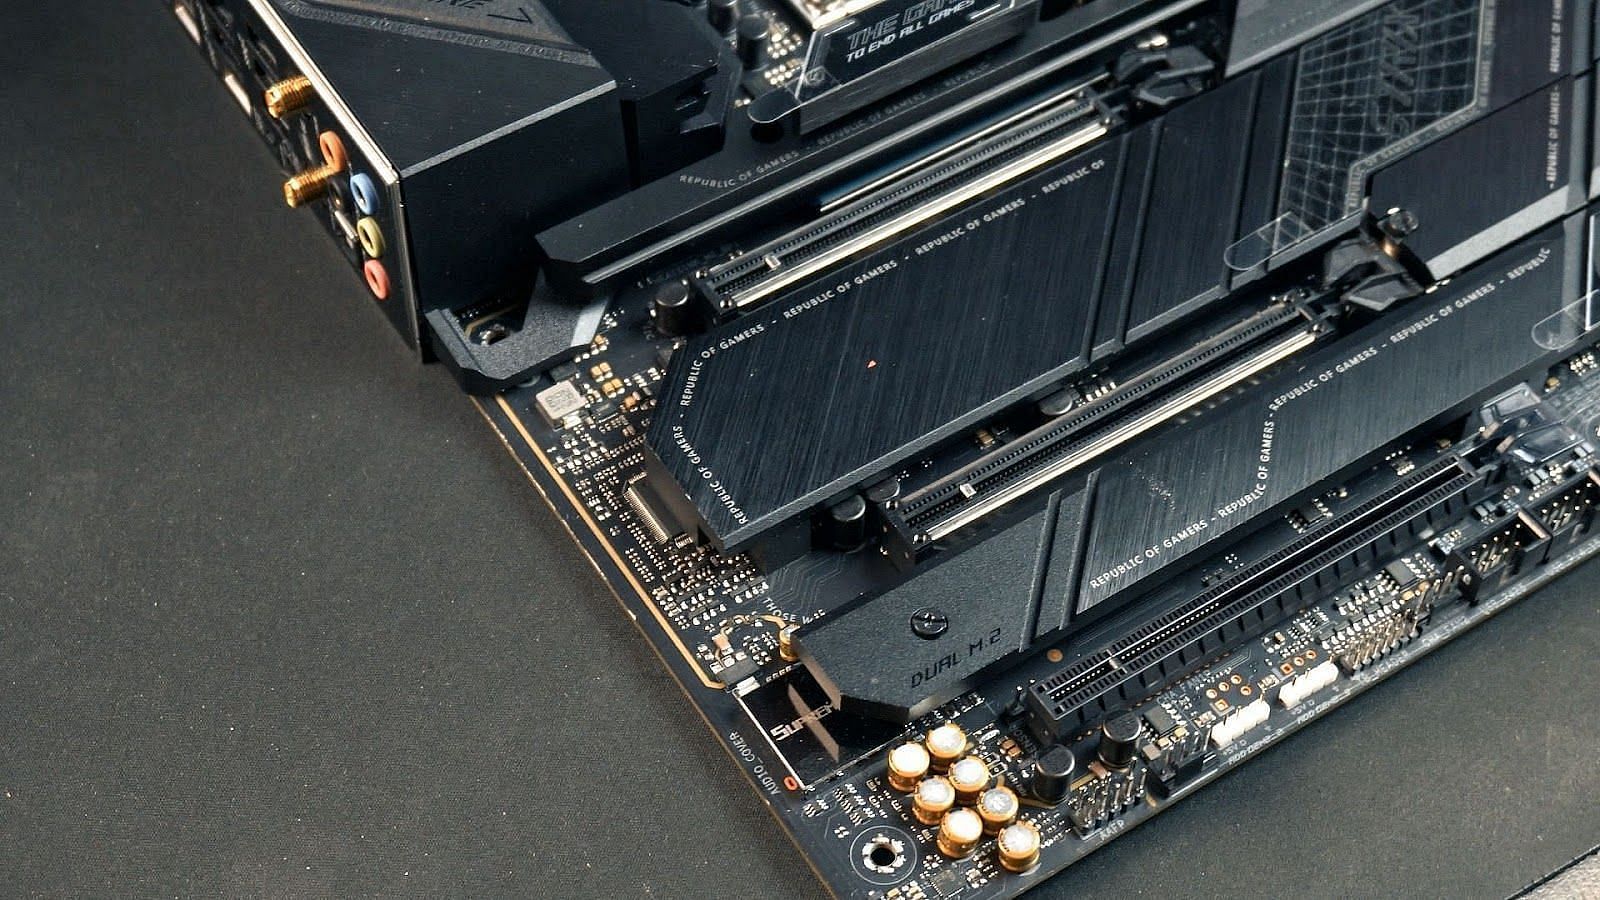 The heatsinks of the ASUS motherboard (Image via Sportskeeda)